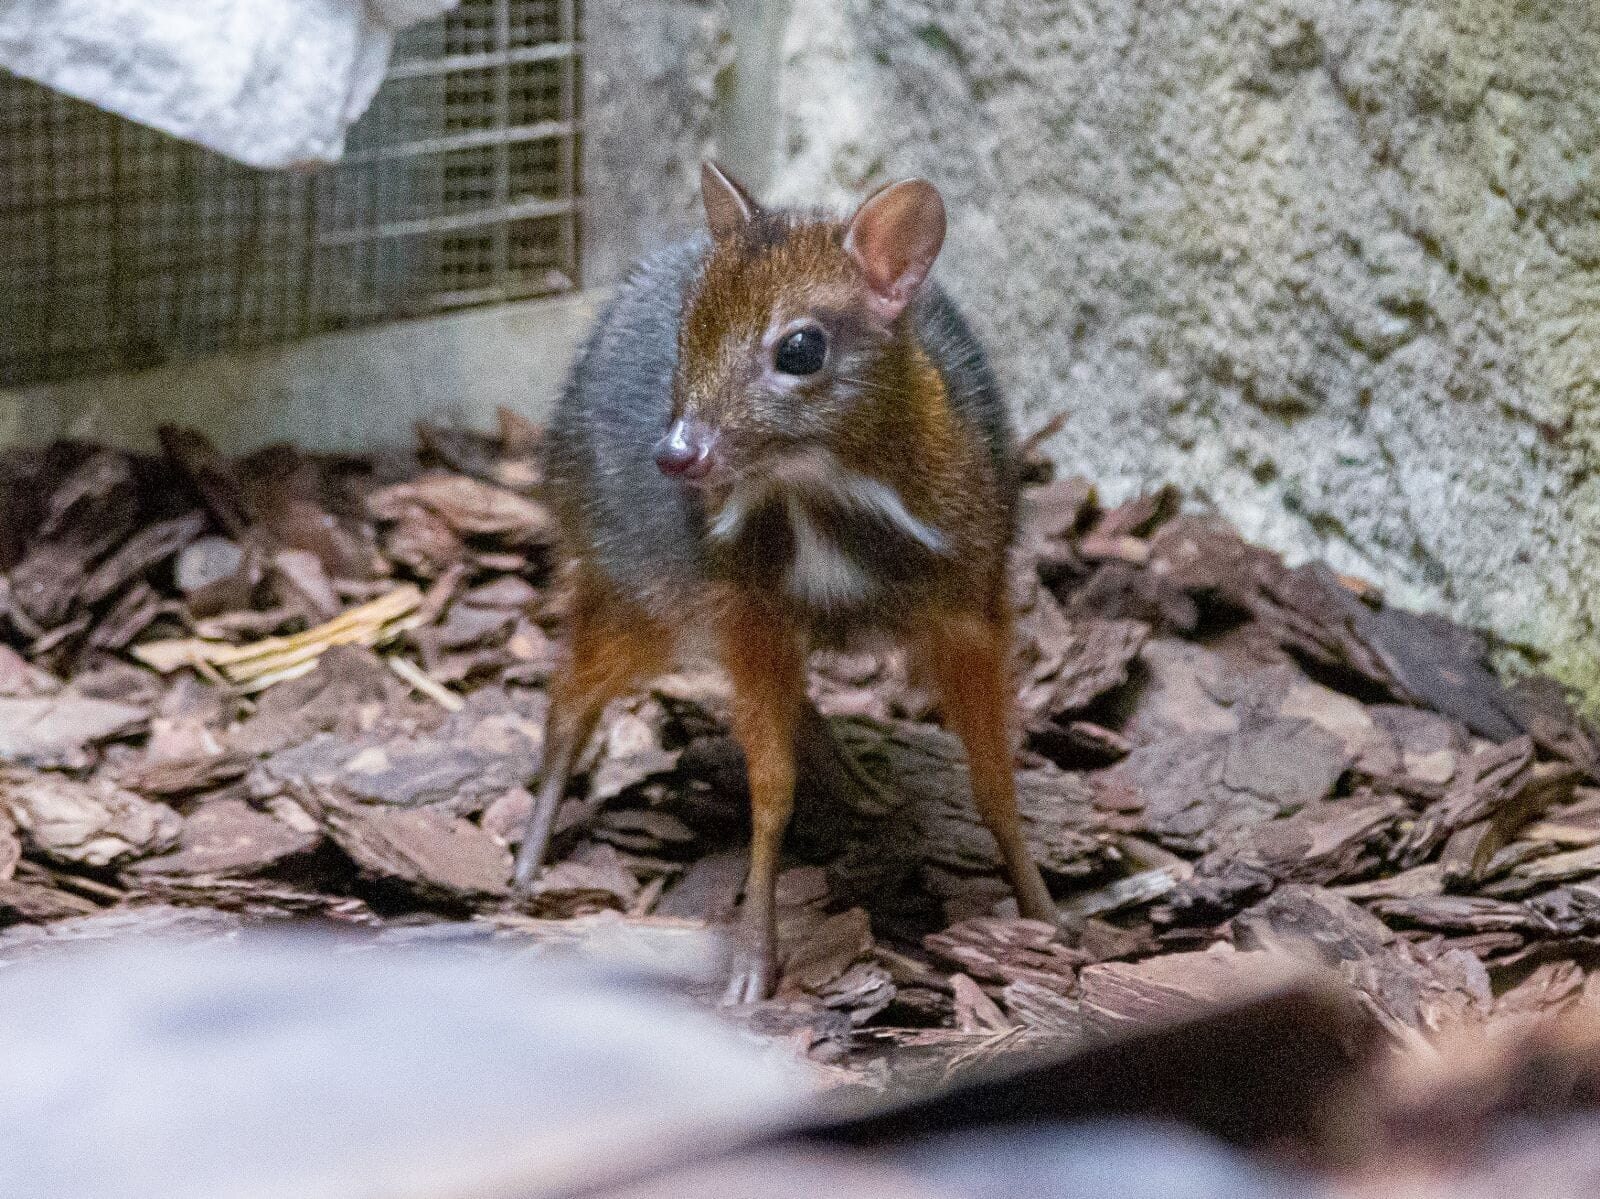 Another Javan chevrolet in the Warsaw zoo.  "Mouse Deer Babyboom"